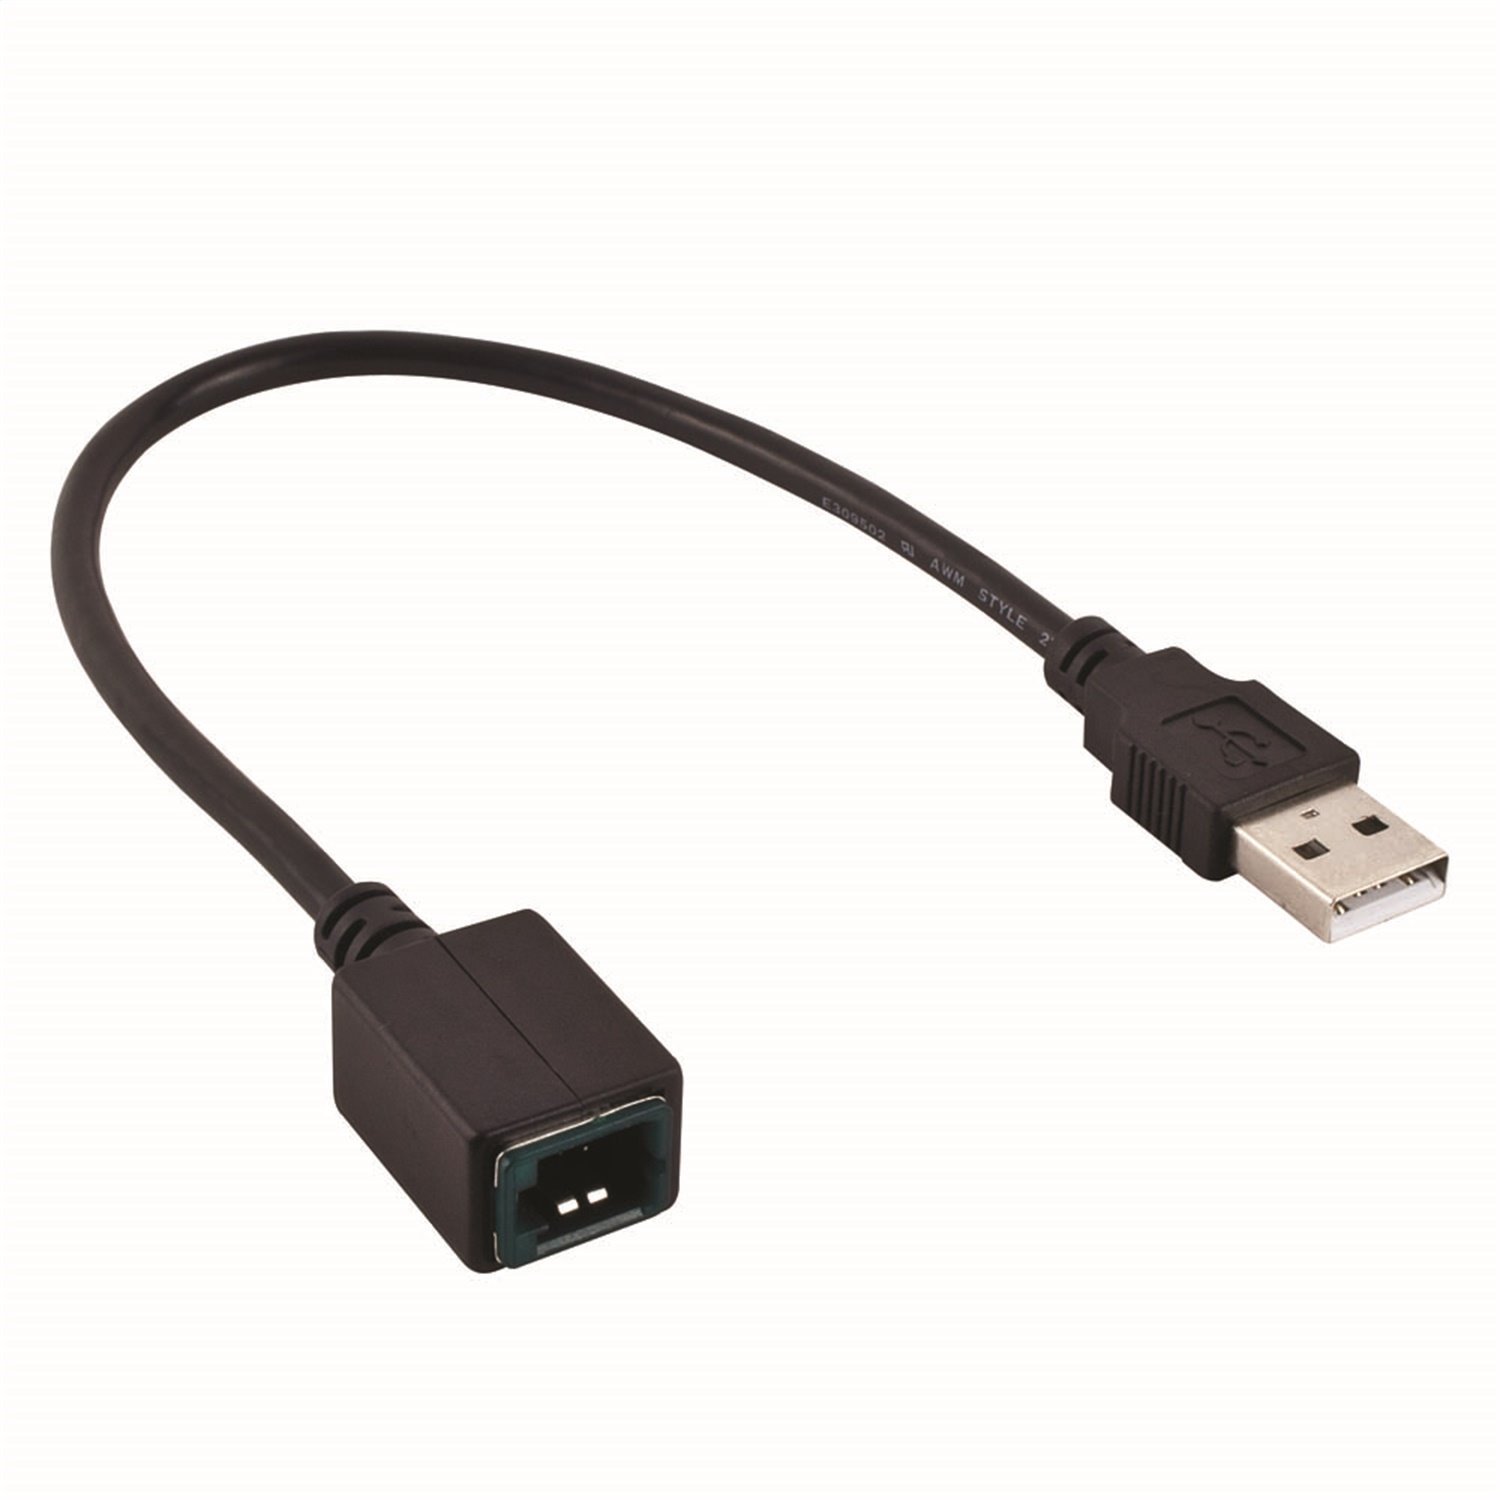 AXUSB-MZ USB Adaptor